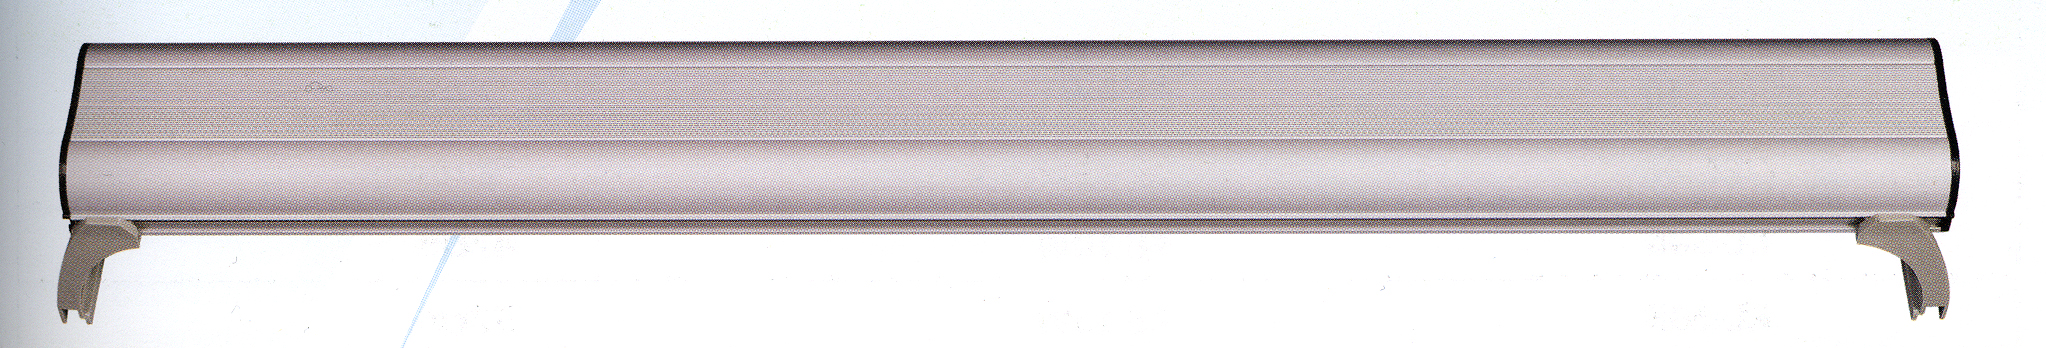 XILONG светильник T8 2х20Вт XL-80A, 77см